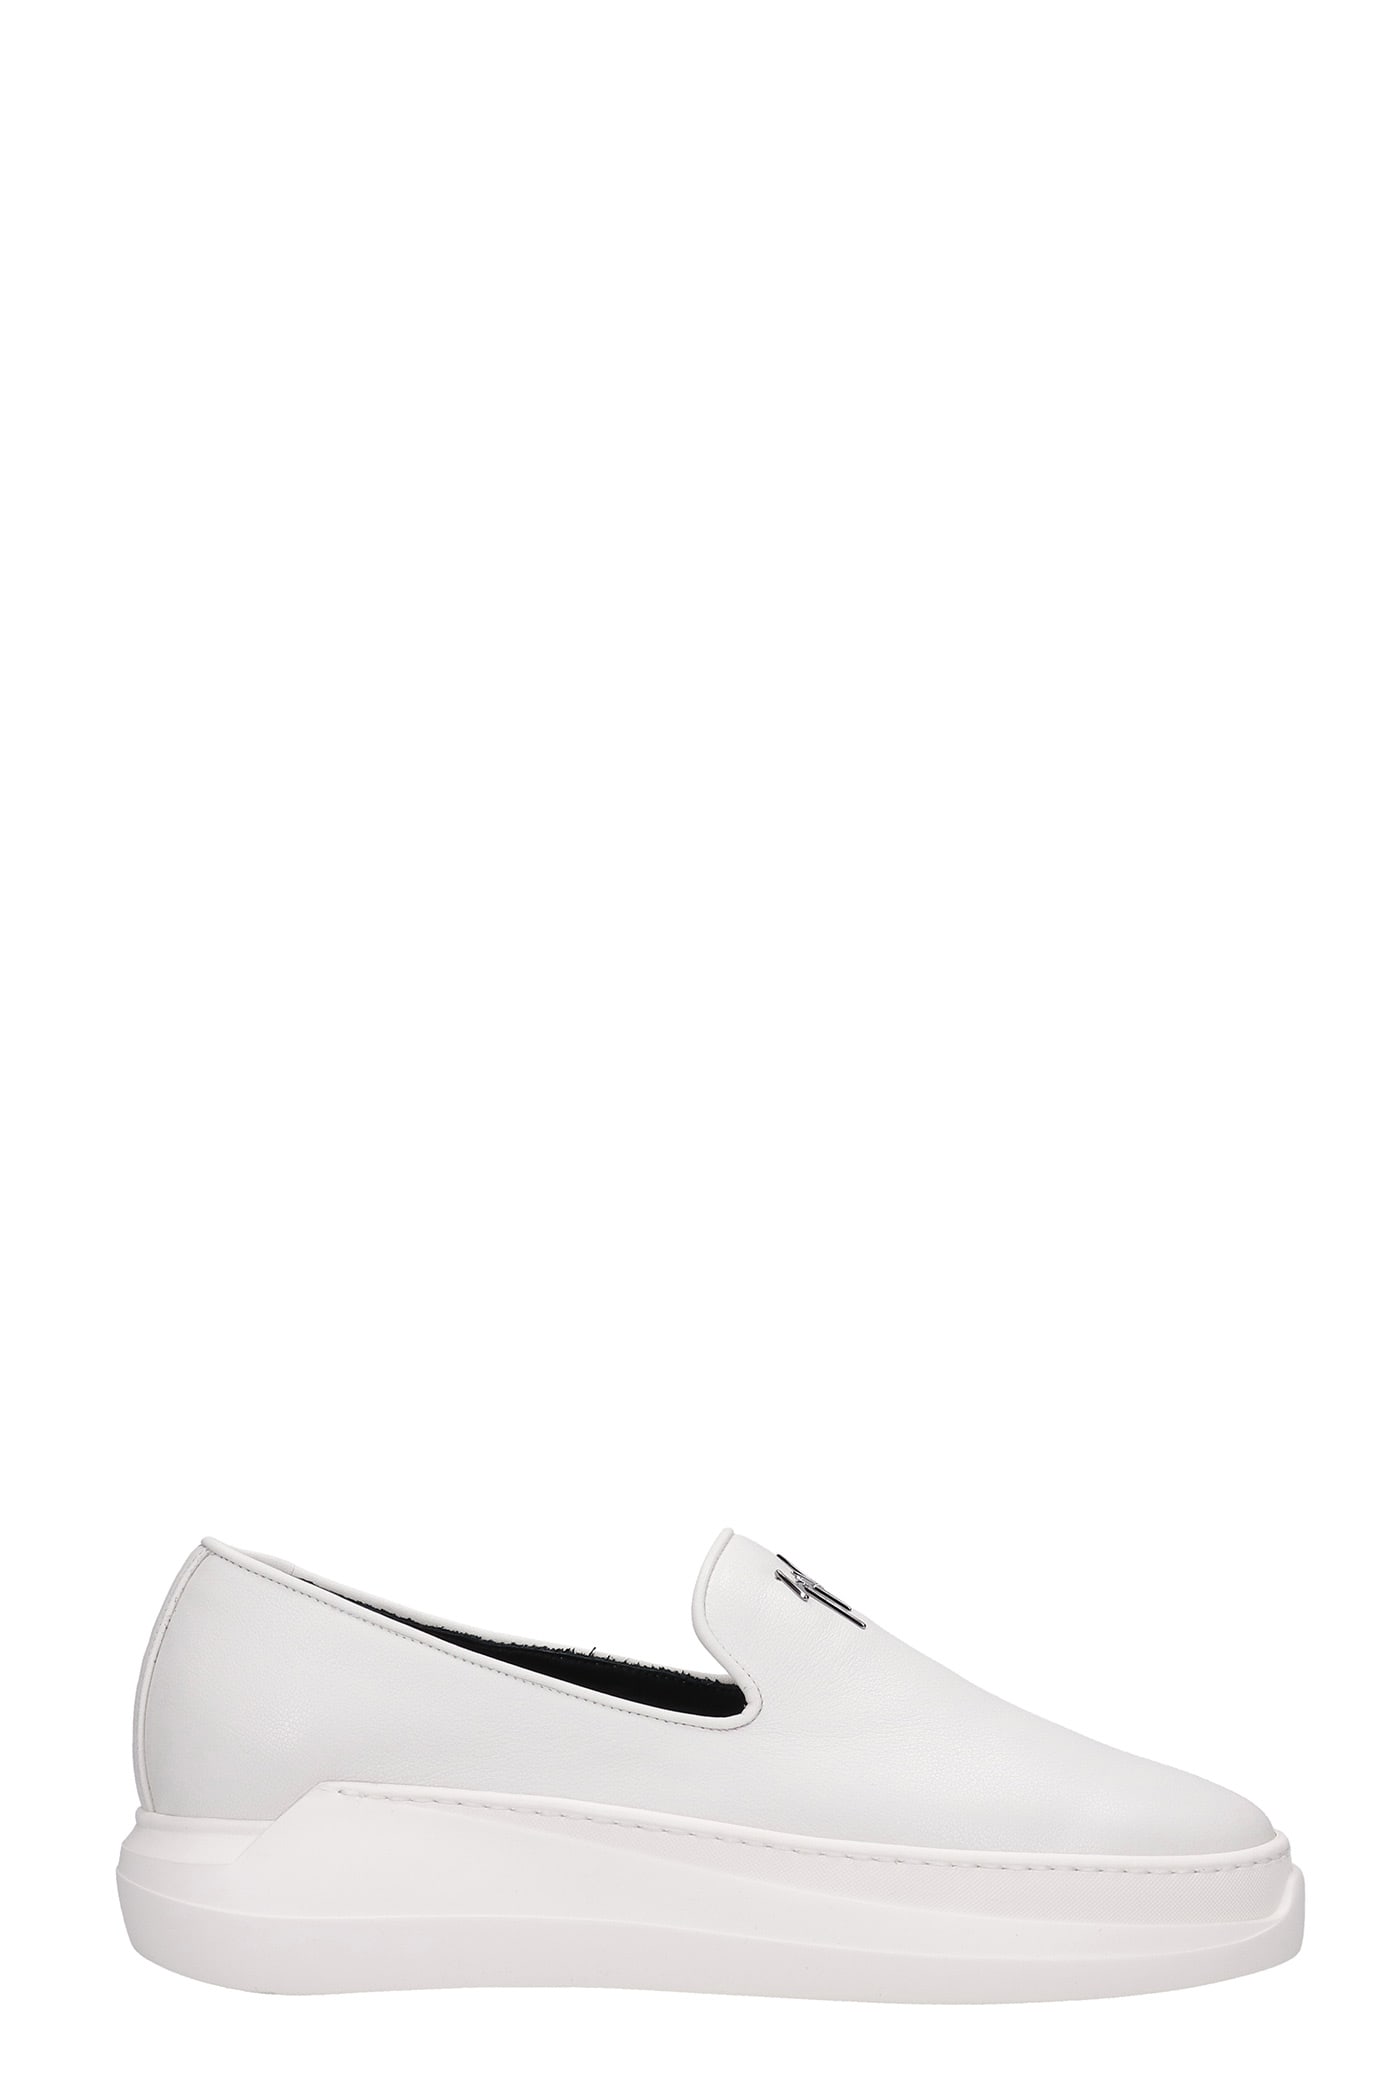 Giuseppe Zanotti Conley Sneakers In White Leather